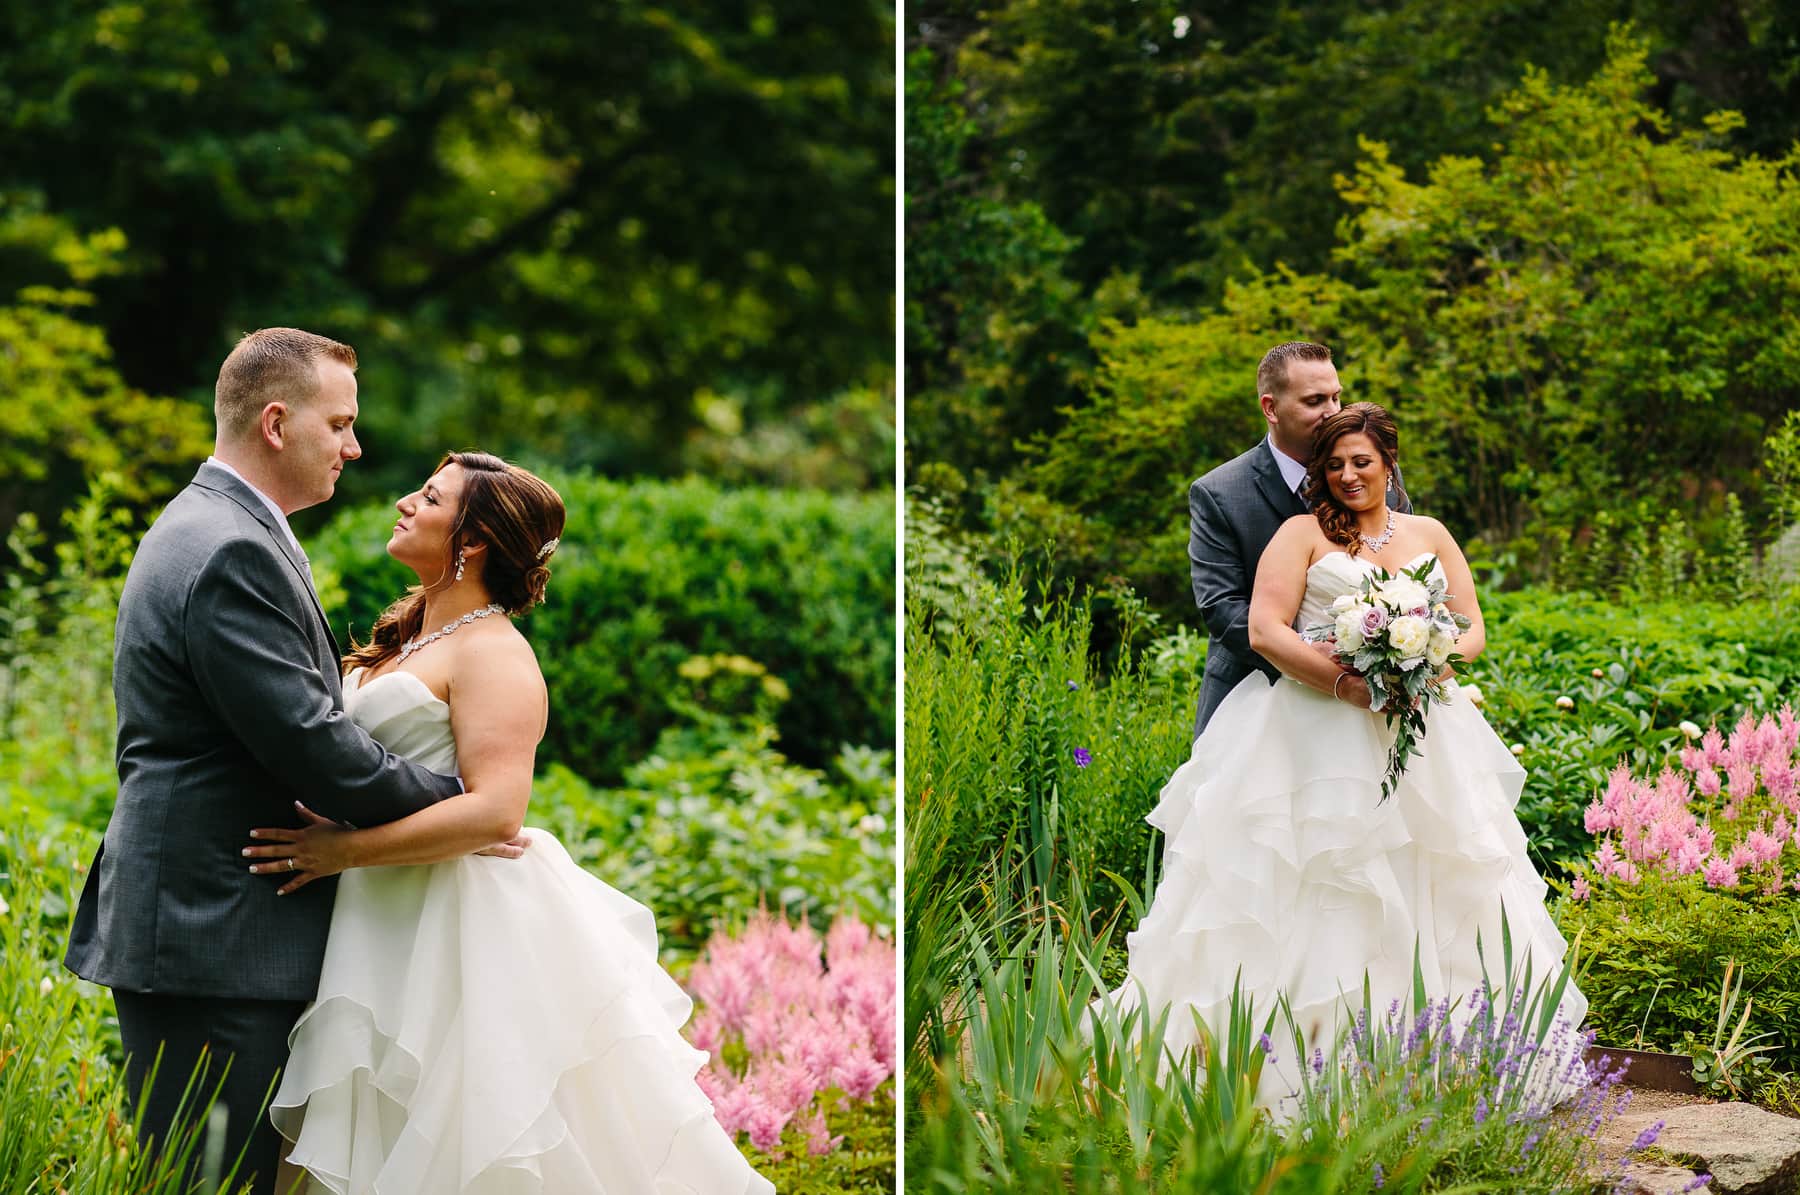 Christine and Michael's Estate at Moraine Farm wedding in Beverly, MA | Kelly Benvenuto Photography | Boston Wedding Photographer